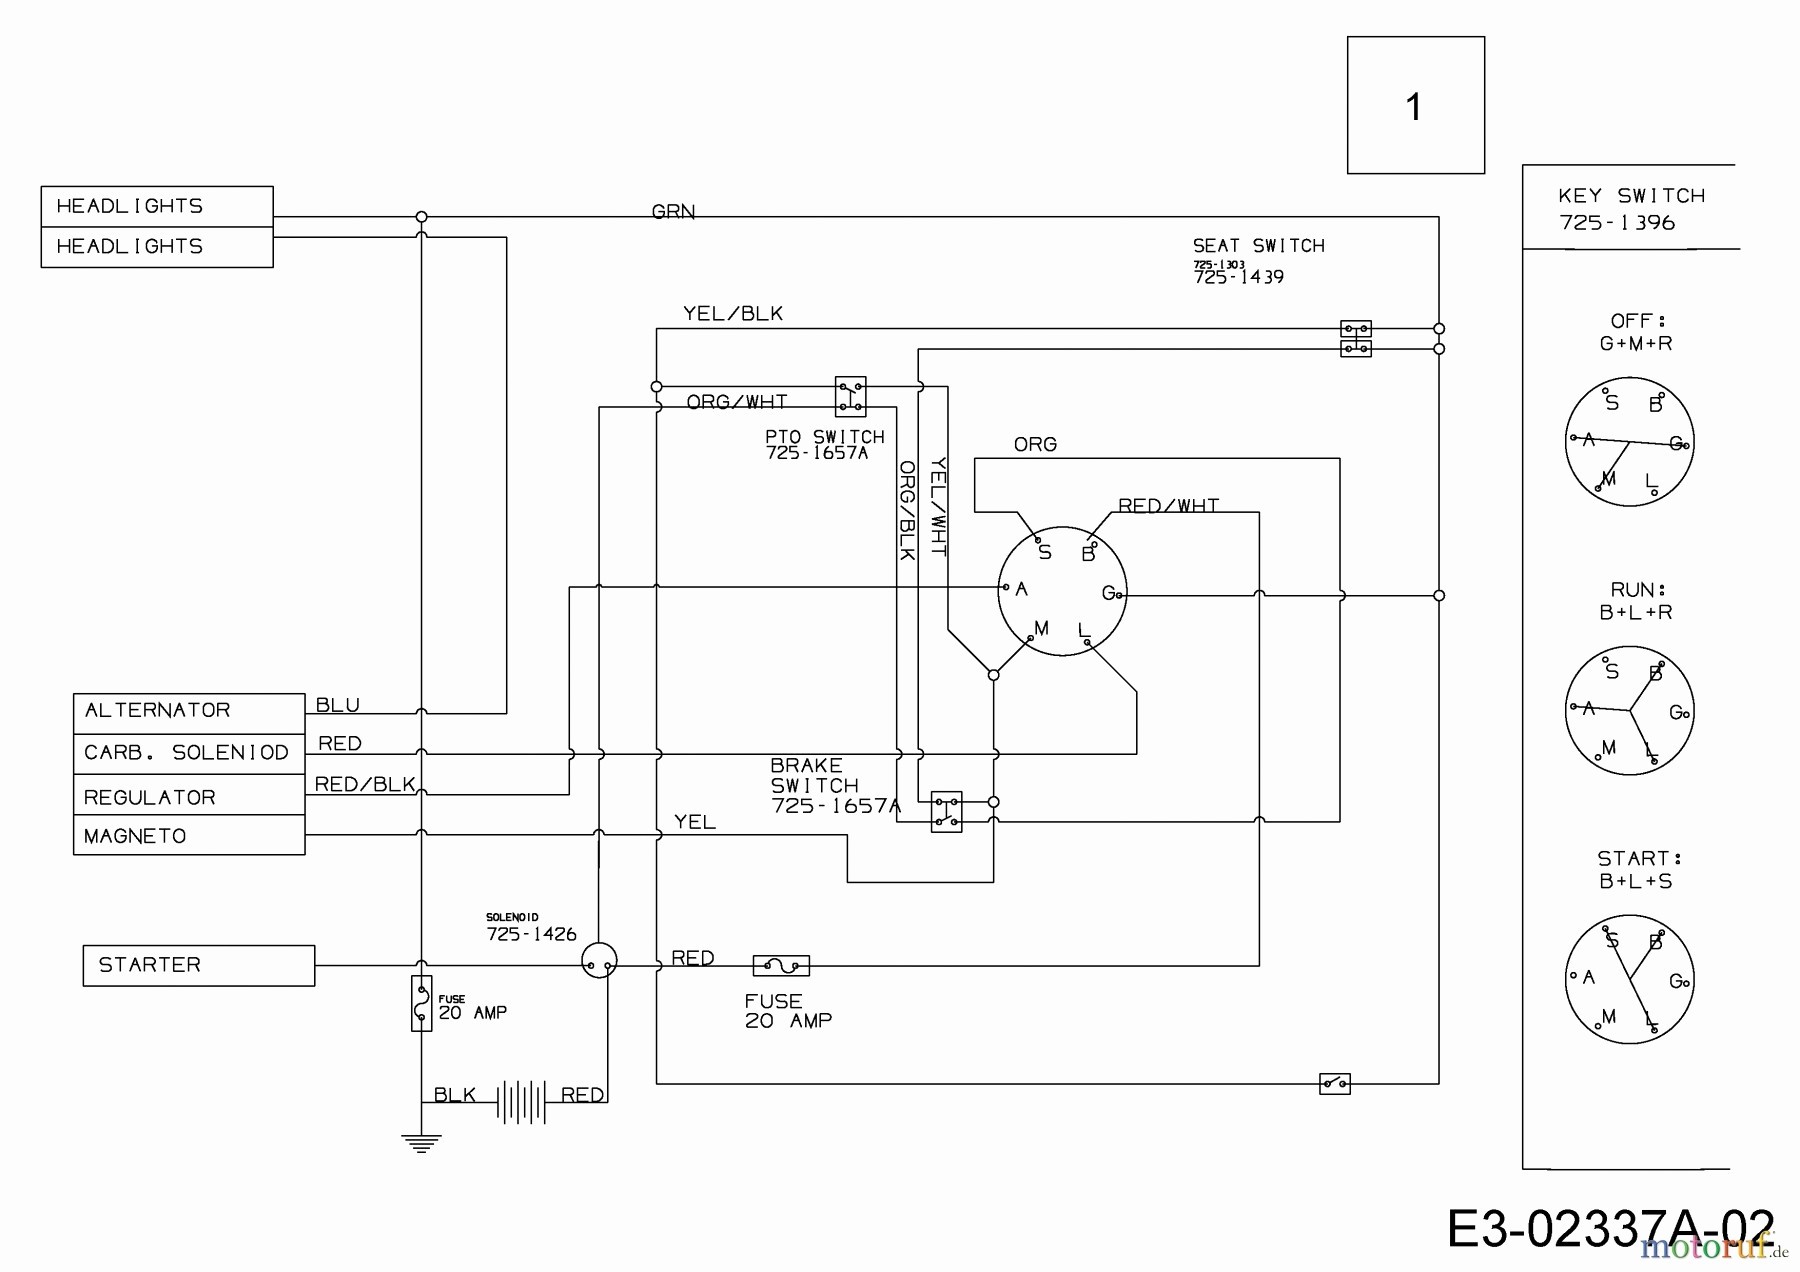 Boss Amplifier Wiring Diagram Best Wiring Diagram Farmall H Wiring Diagram Unique Switch Loop Wiring